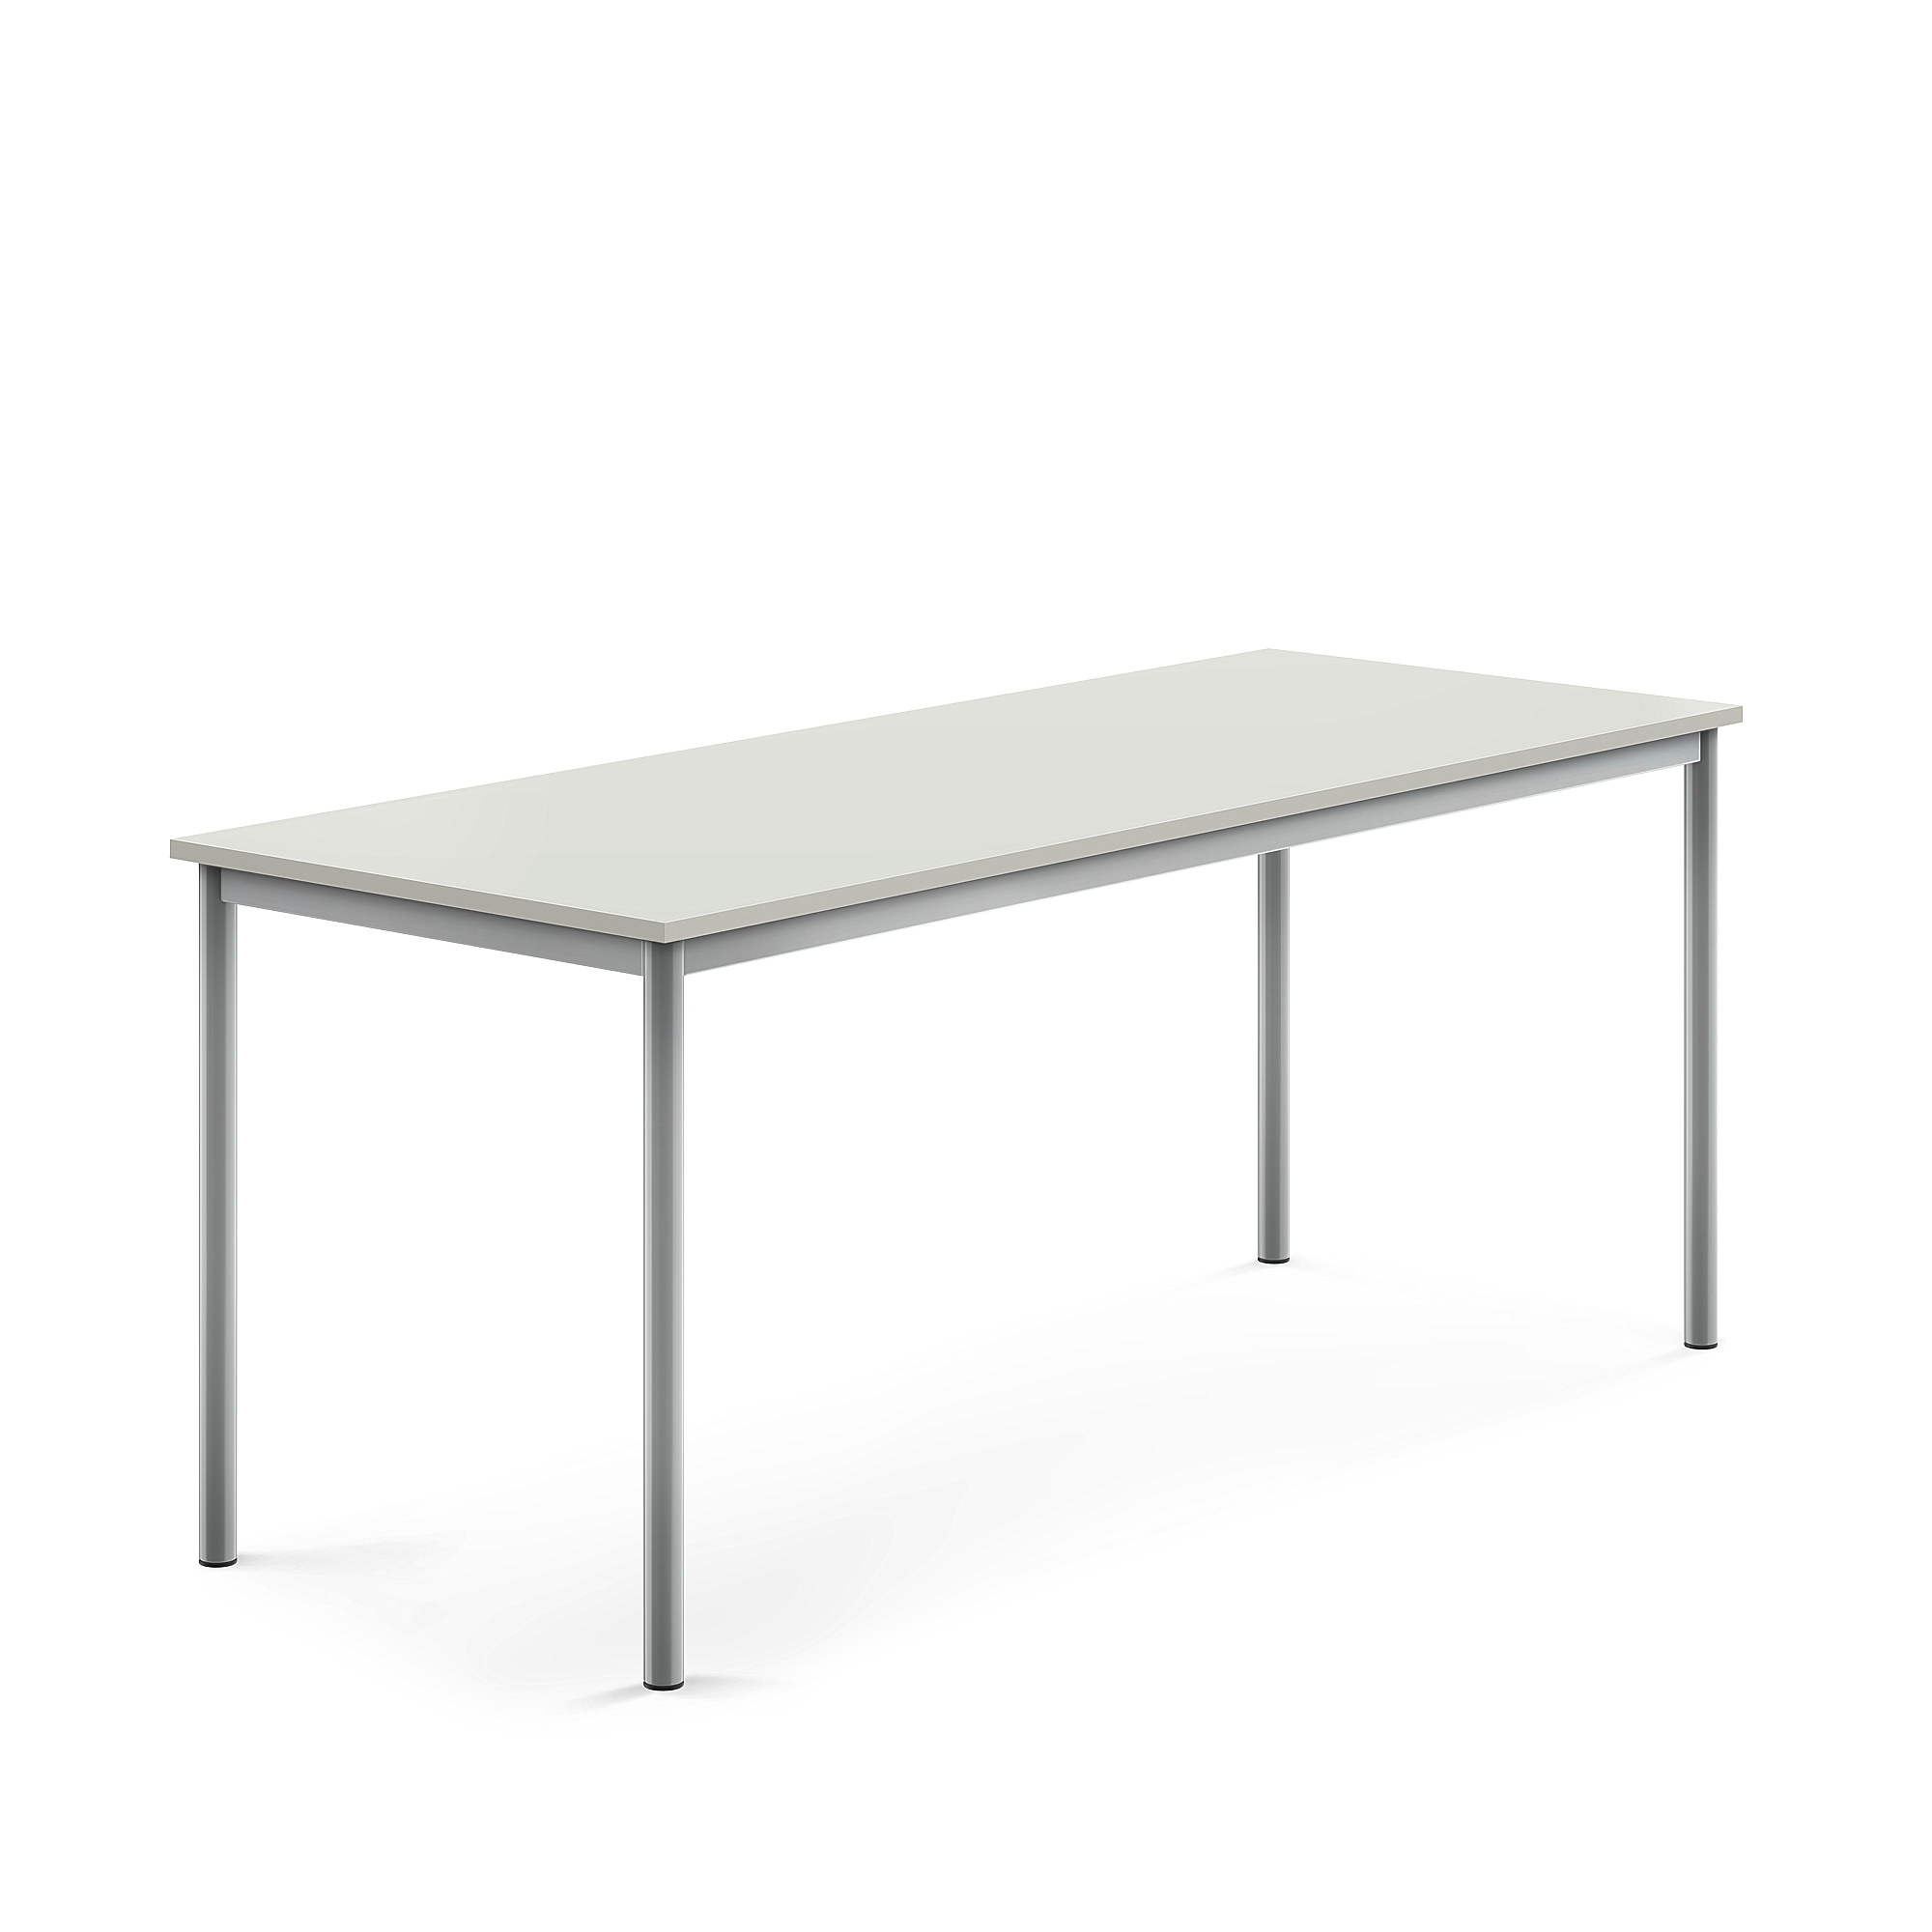 Stůl SONITUS, 1800x700x720 mm, stříbrné nohy, HPL deska tlumící hluk, šedá